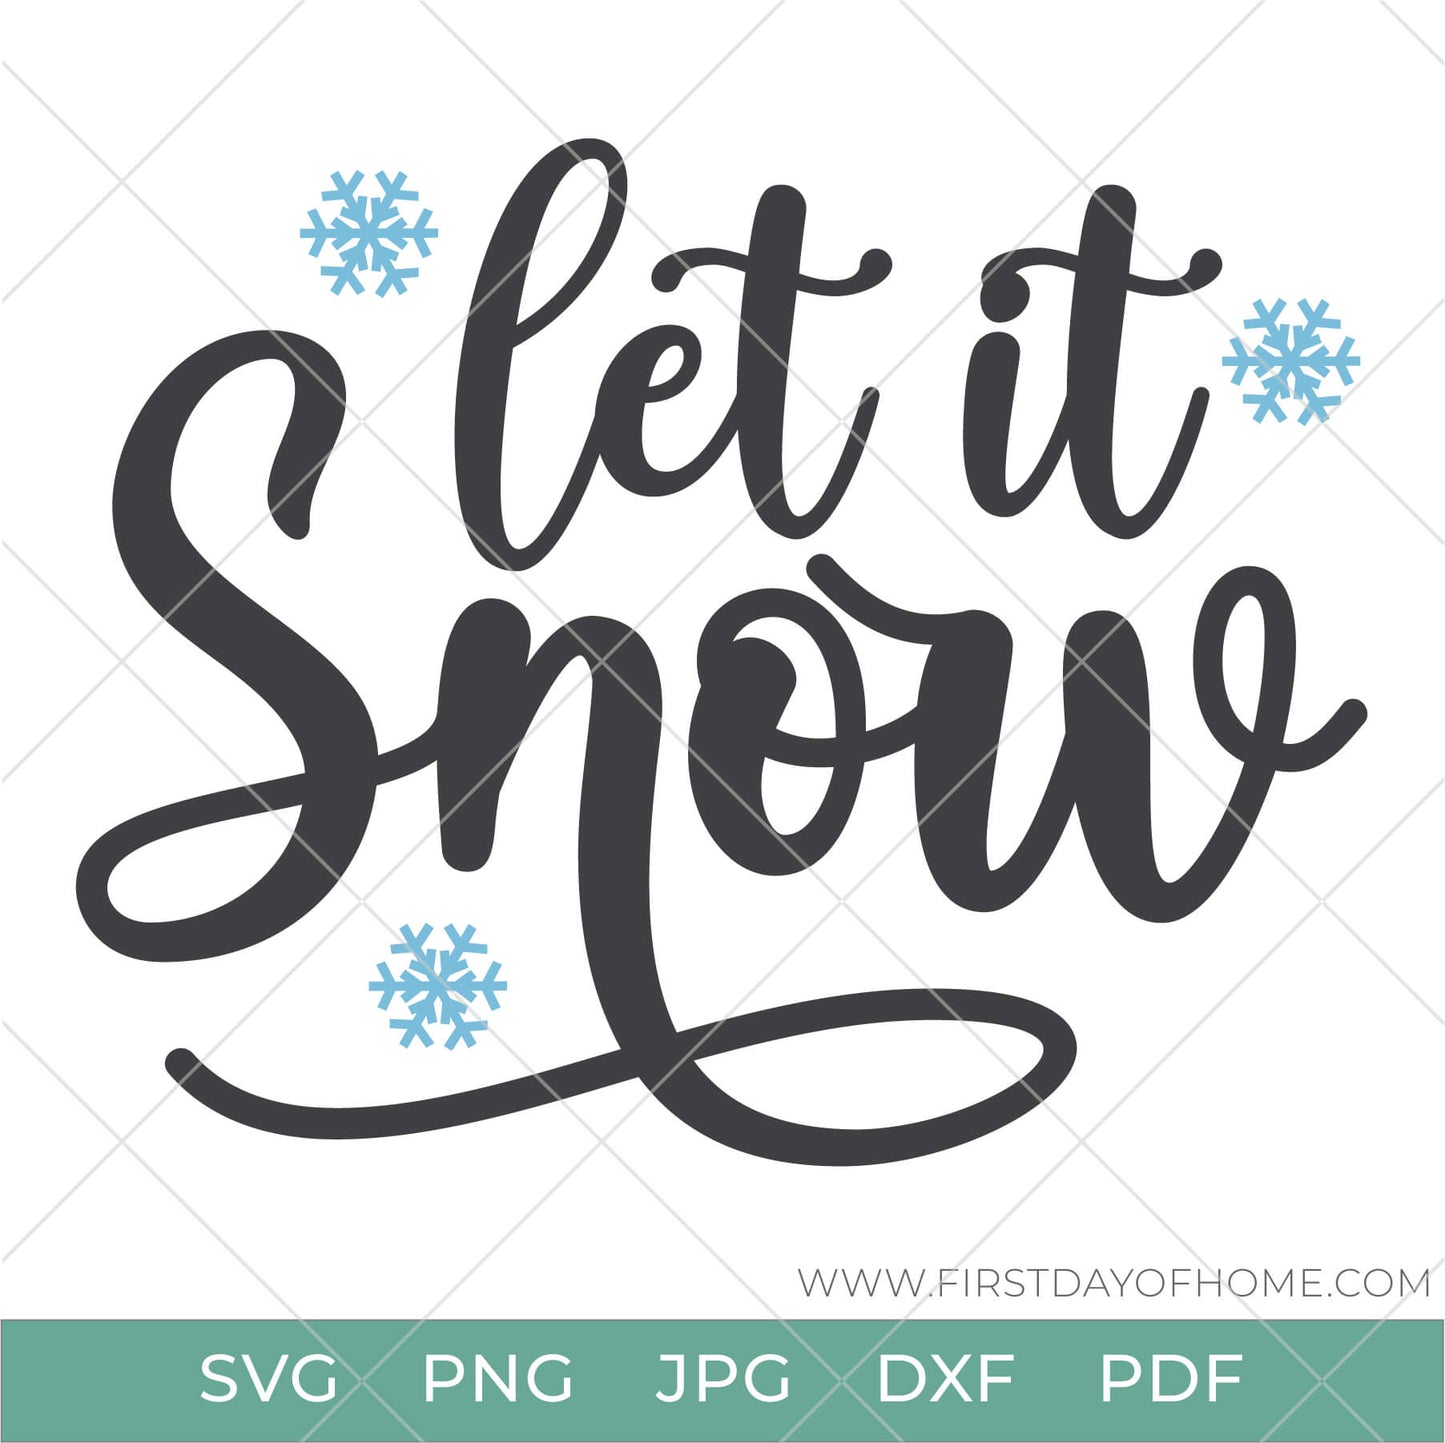 Let it Snow phrase with snowflakes